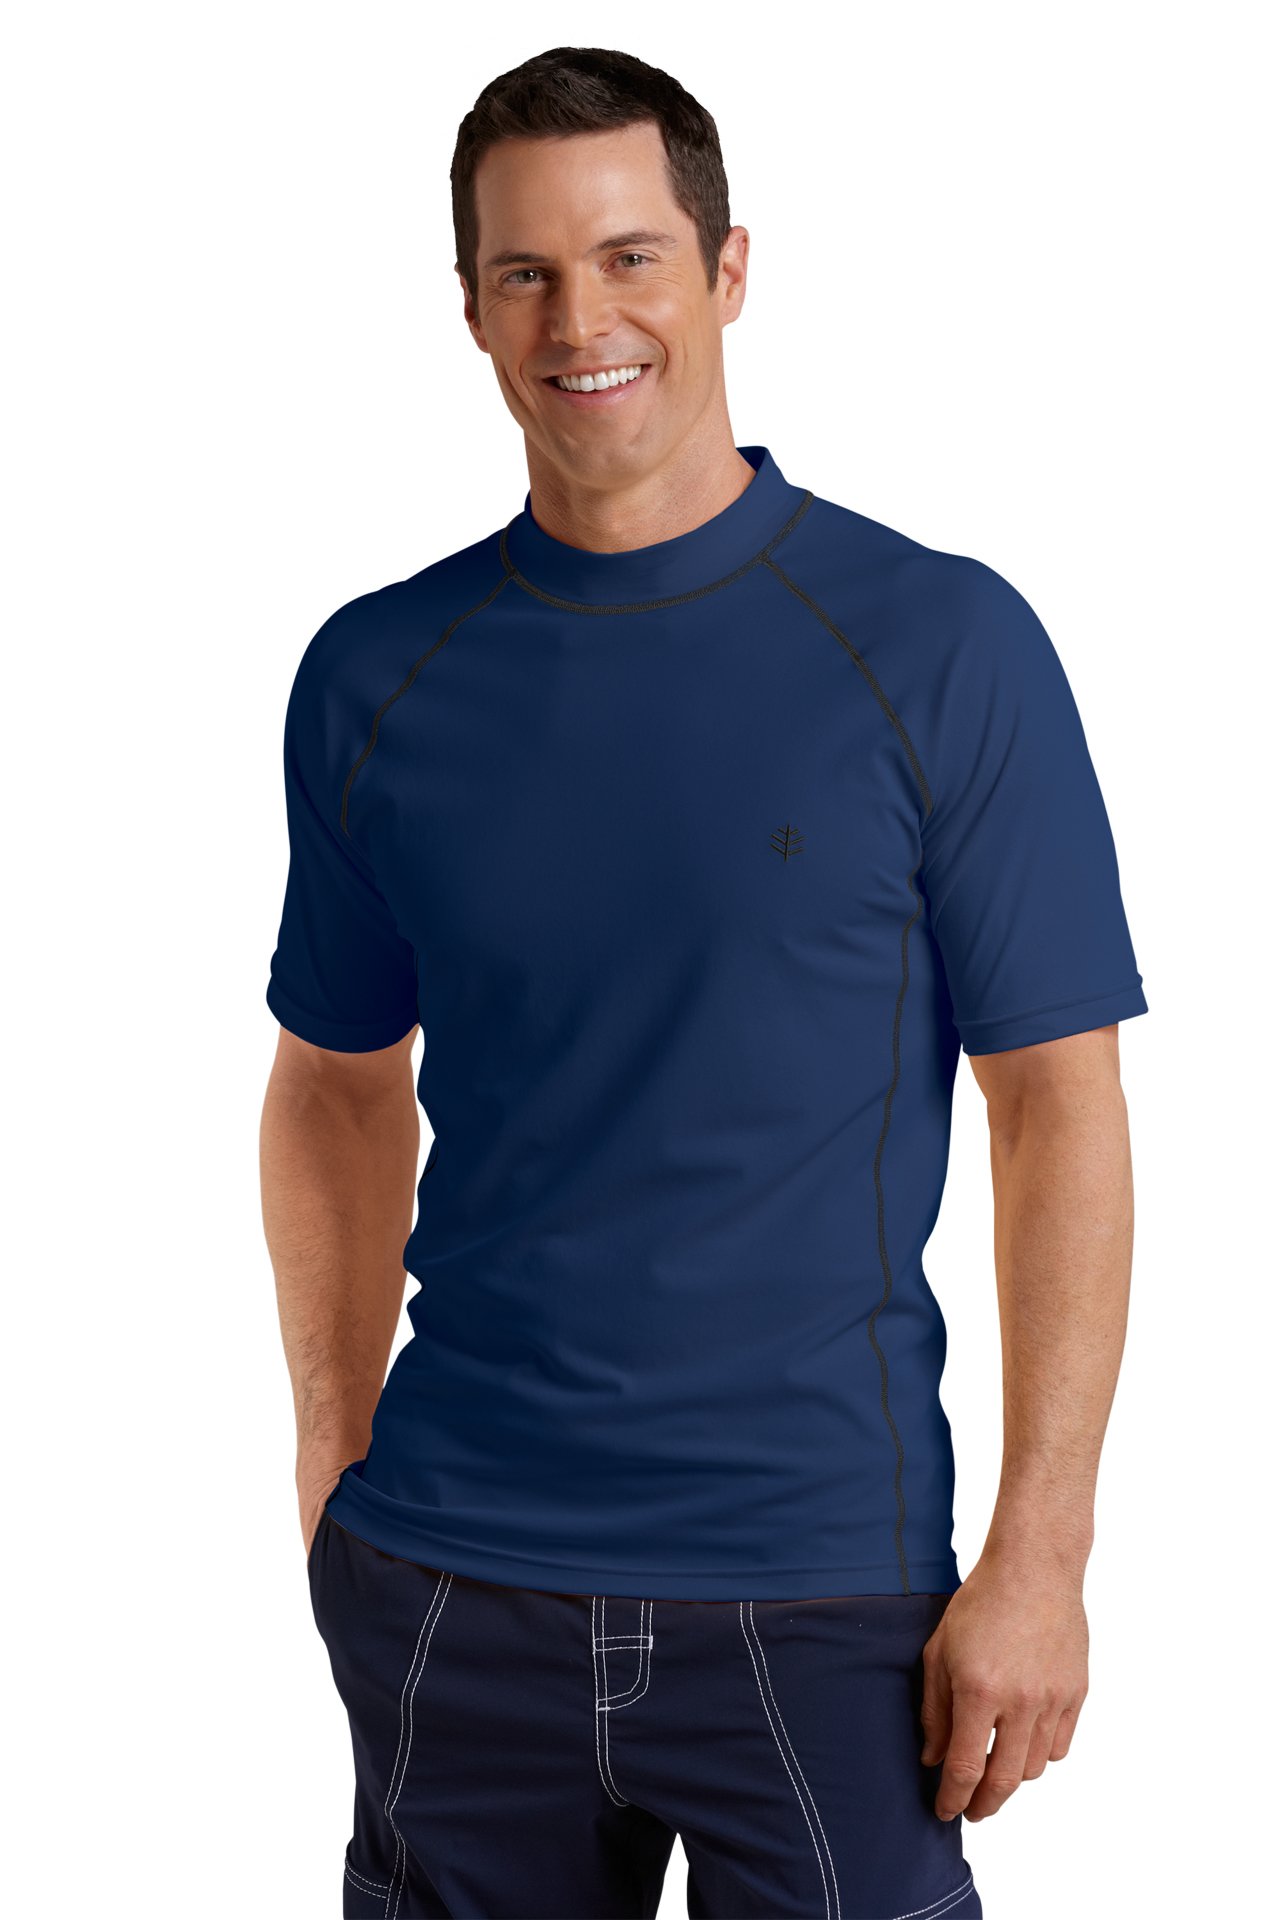 Coolibar - Men's Short Sleeve Swim Shirt - Navy